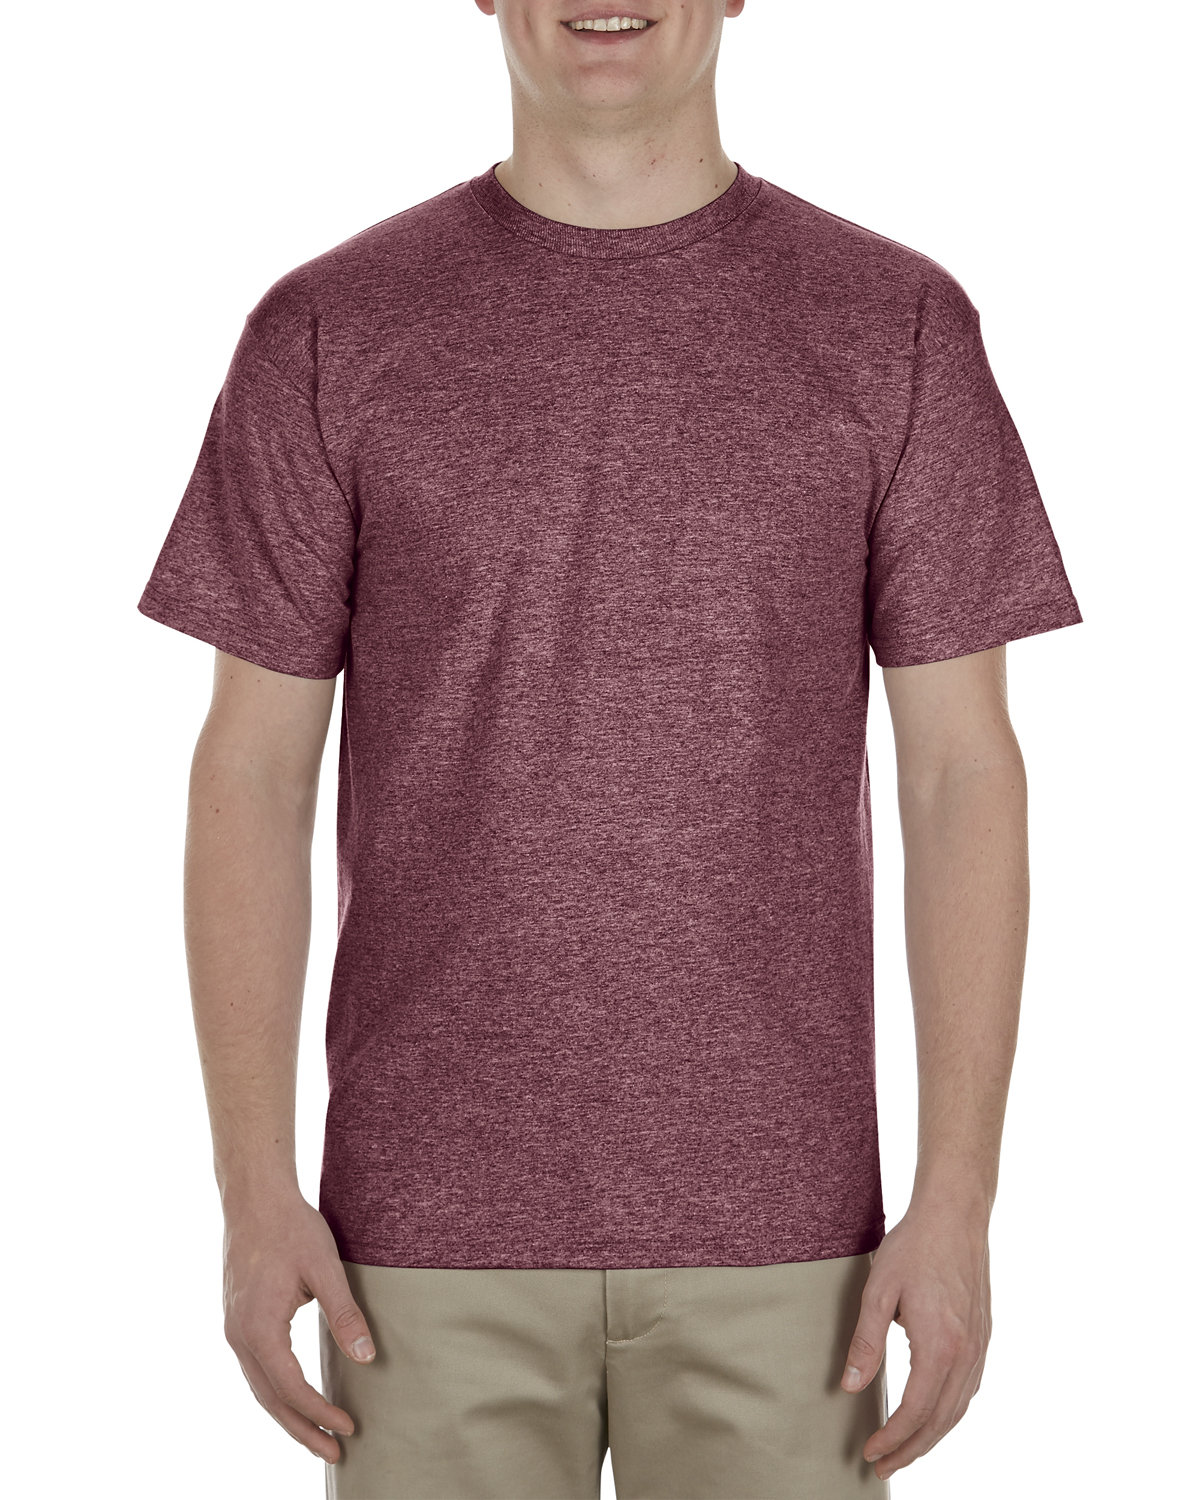 Adult T-Shirt-American Apparel